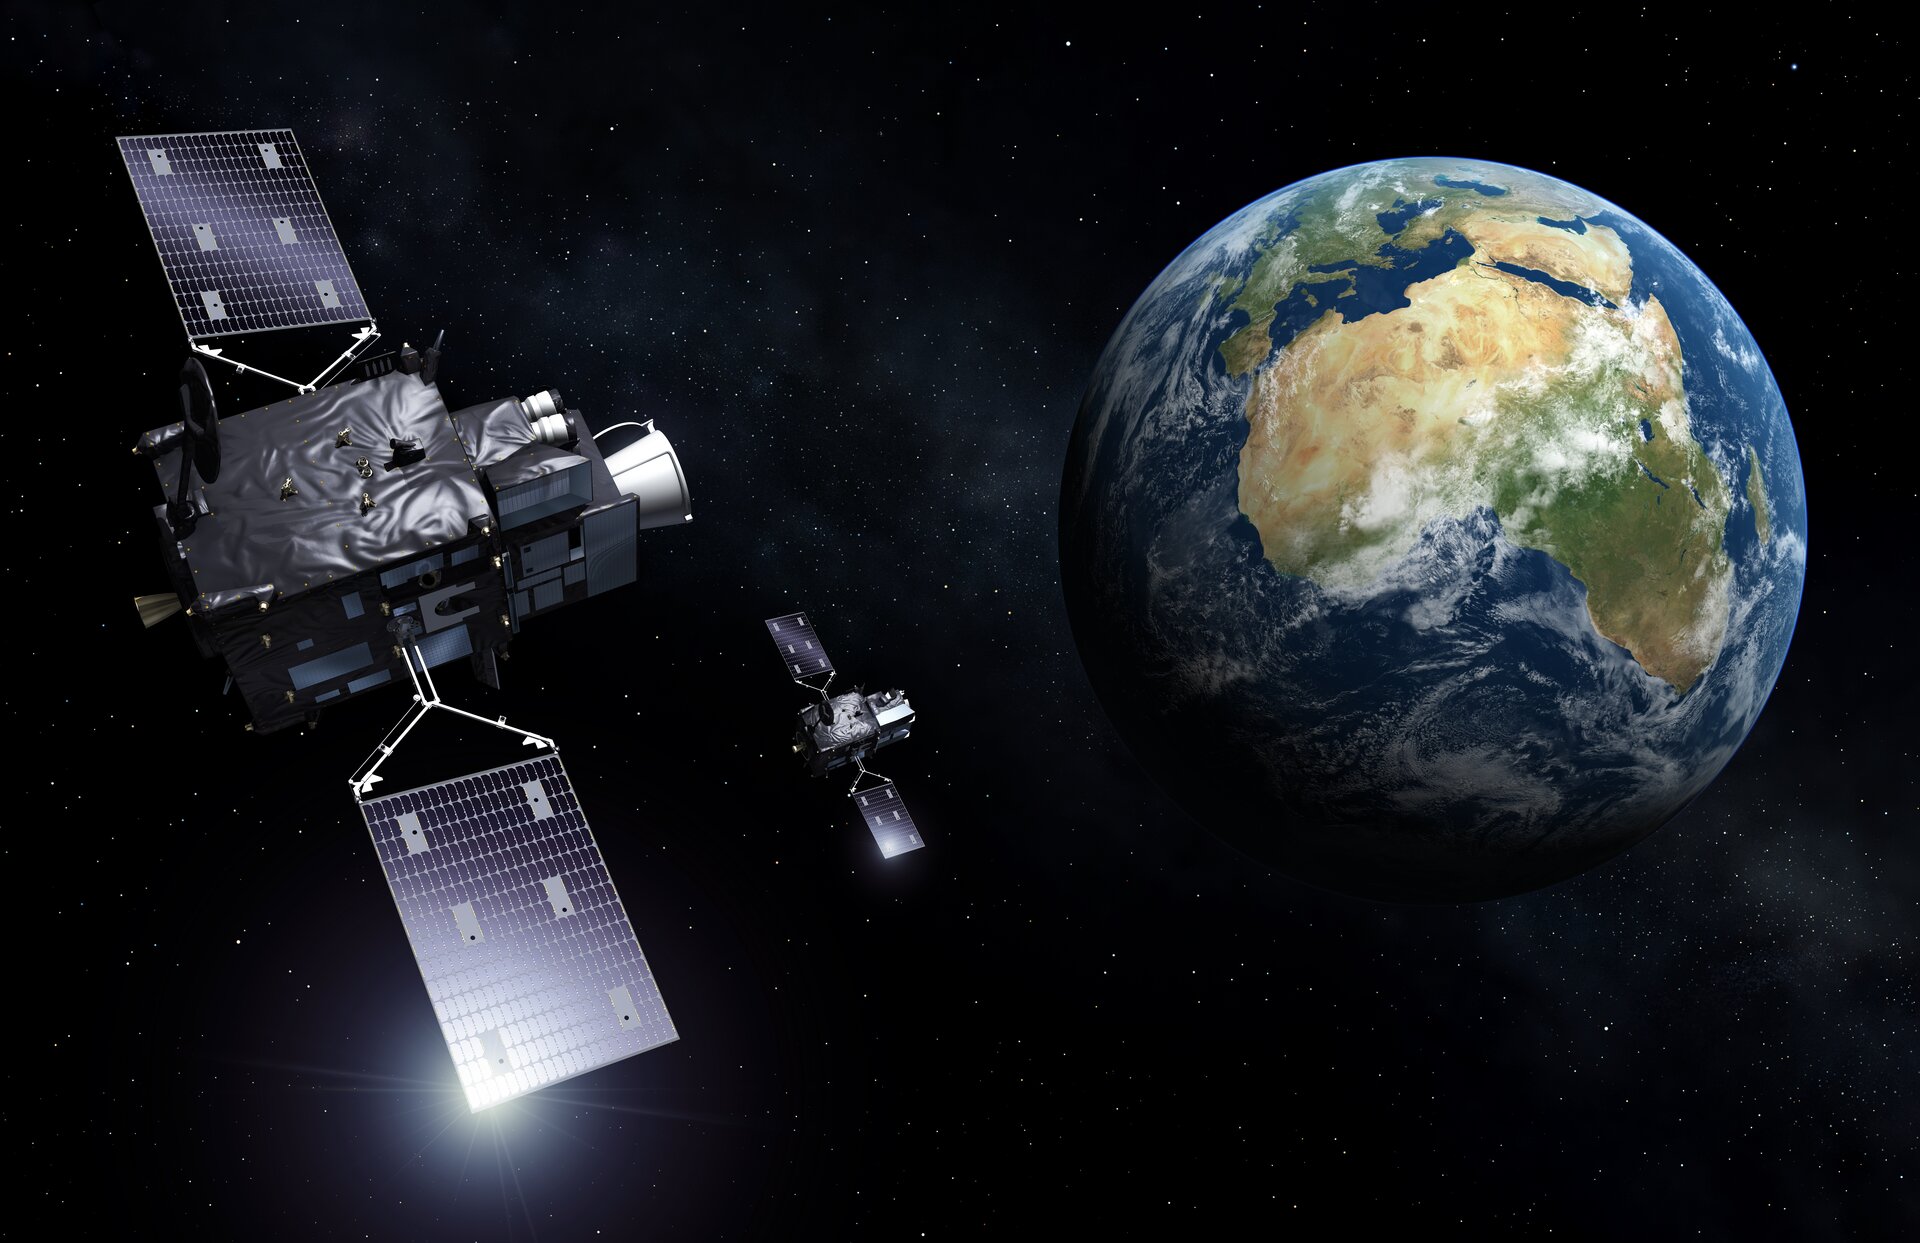 More information about "Νέο κεφάλαιο για τους Ευρωπαϊκούς μετεωρολογικούς δορυφόρους με την εκτόξευση του MTG-I1"